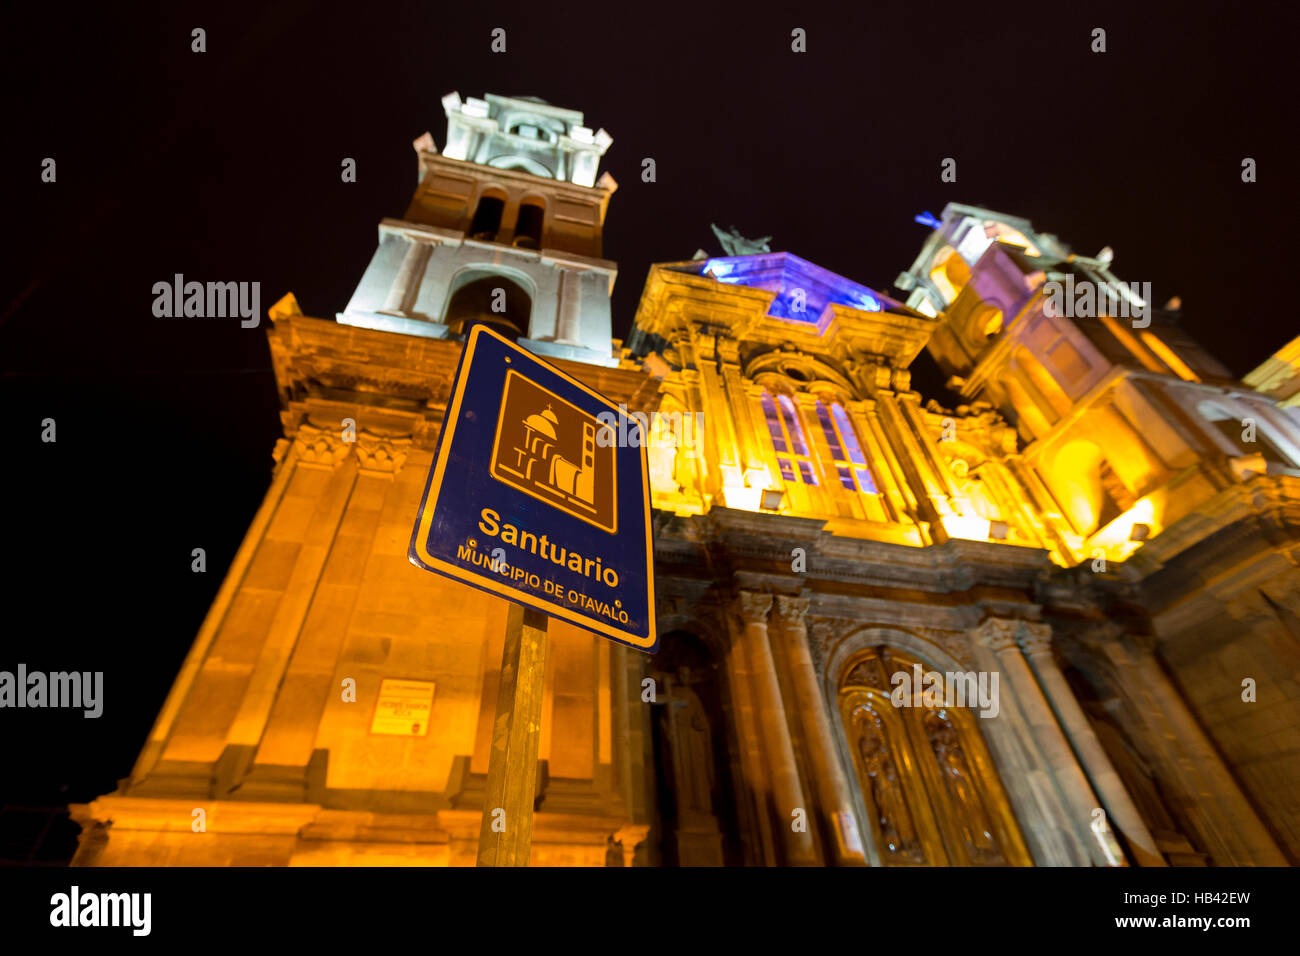 Entrance sign to the Iglesia El Jordan of Otavalo at night, Ecuador Stock Photo